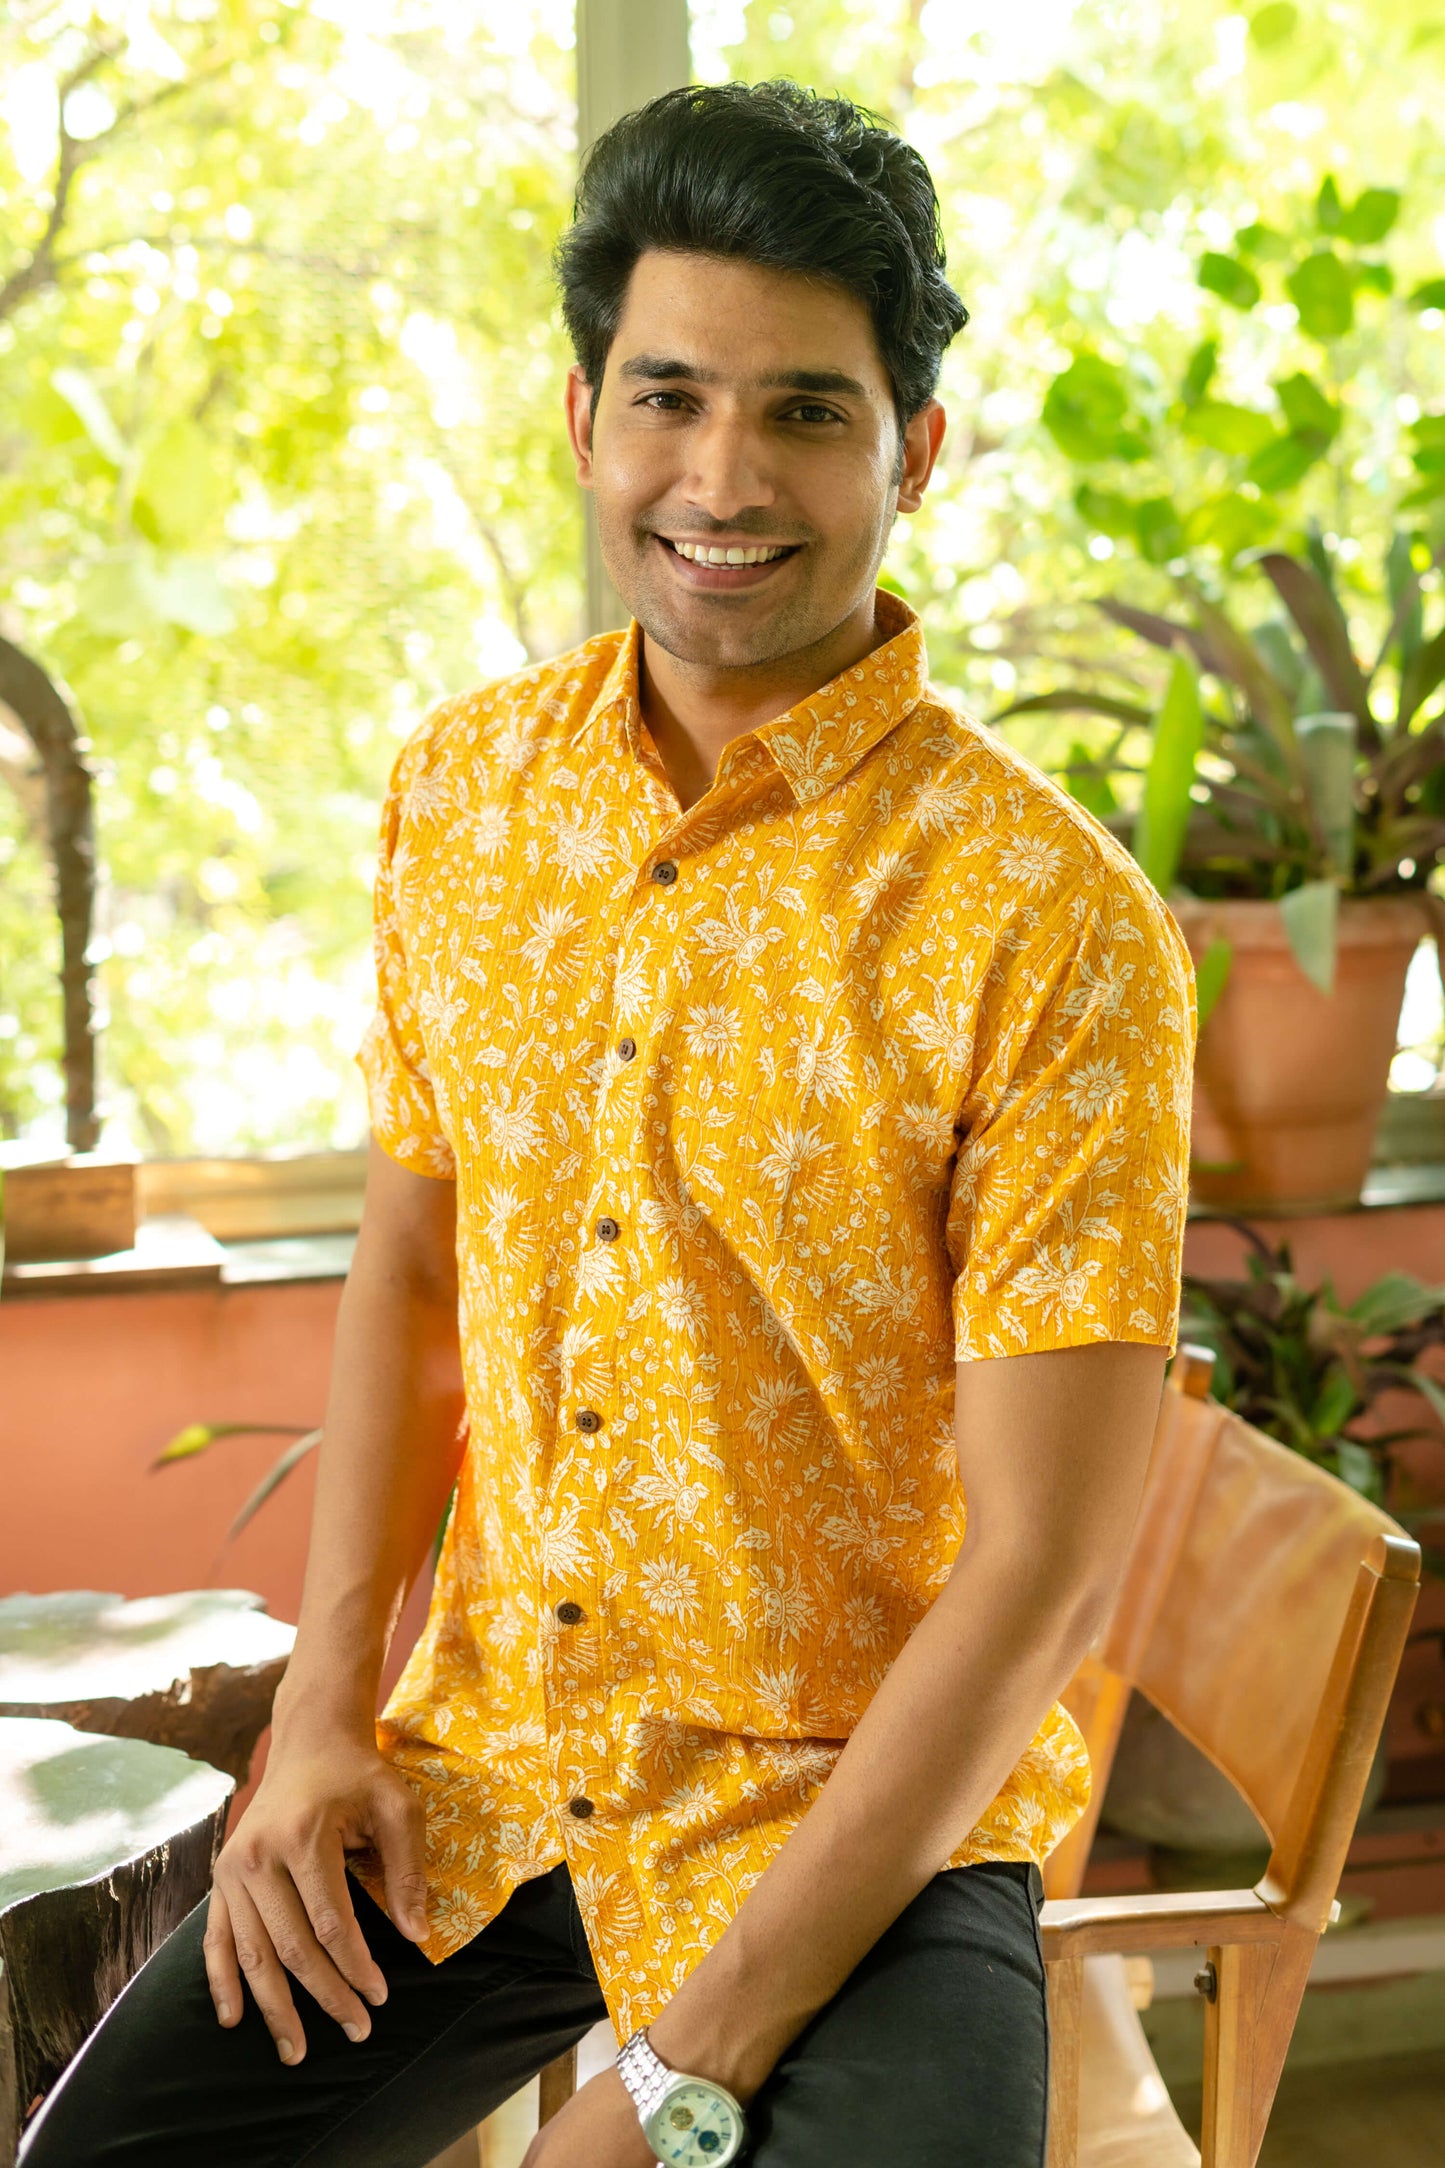 Indian man wearing yellow shirt